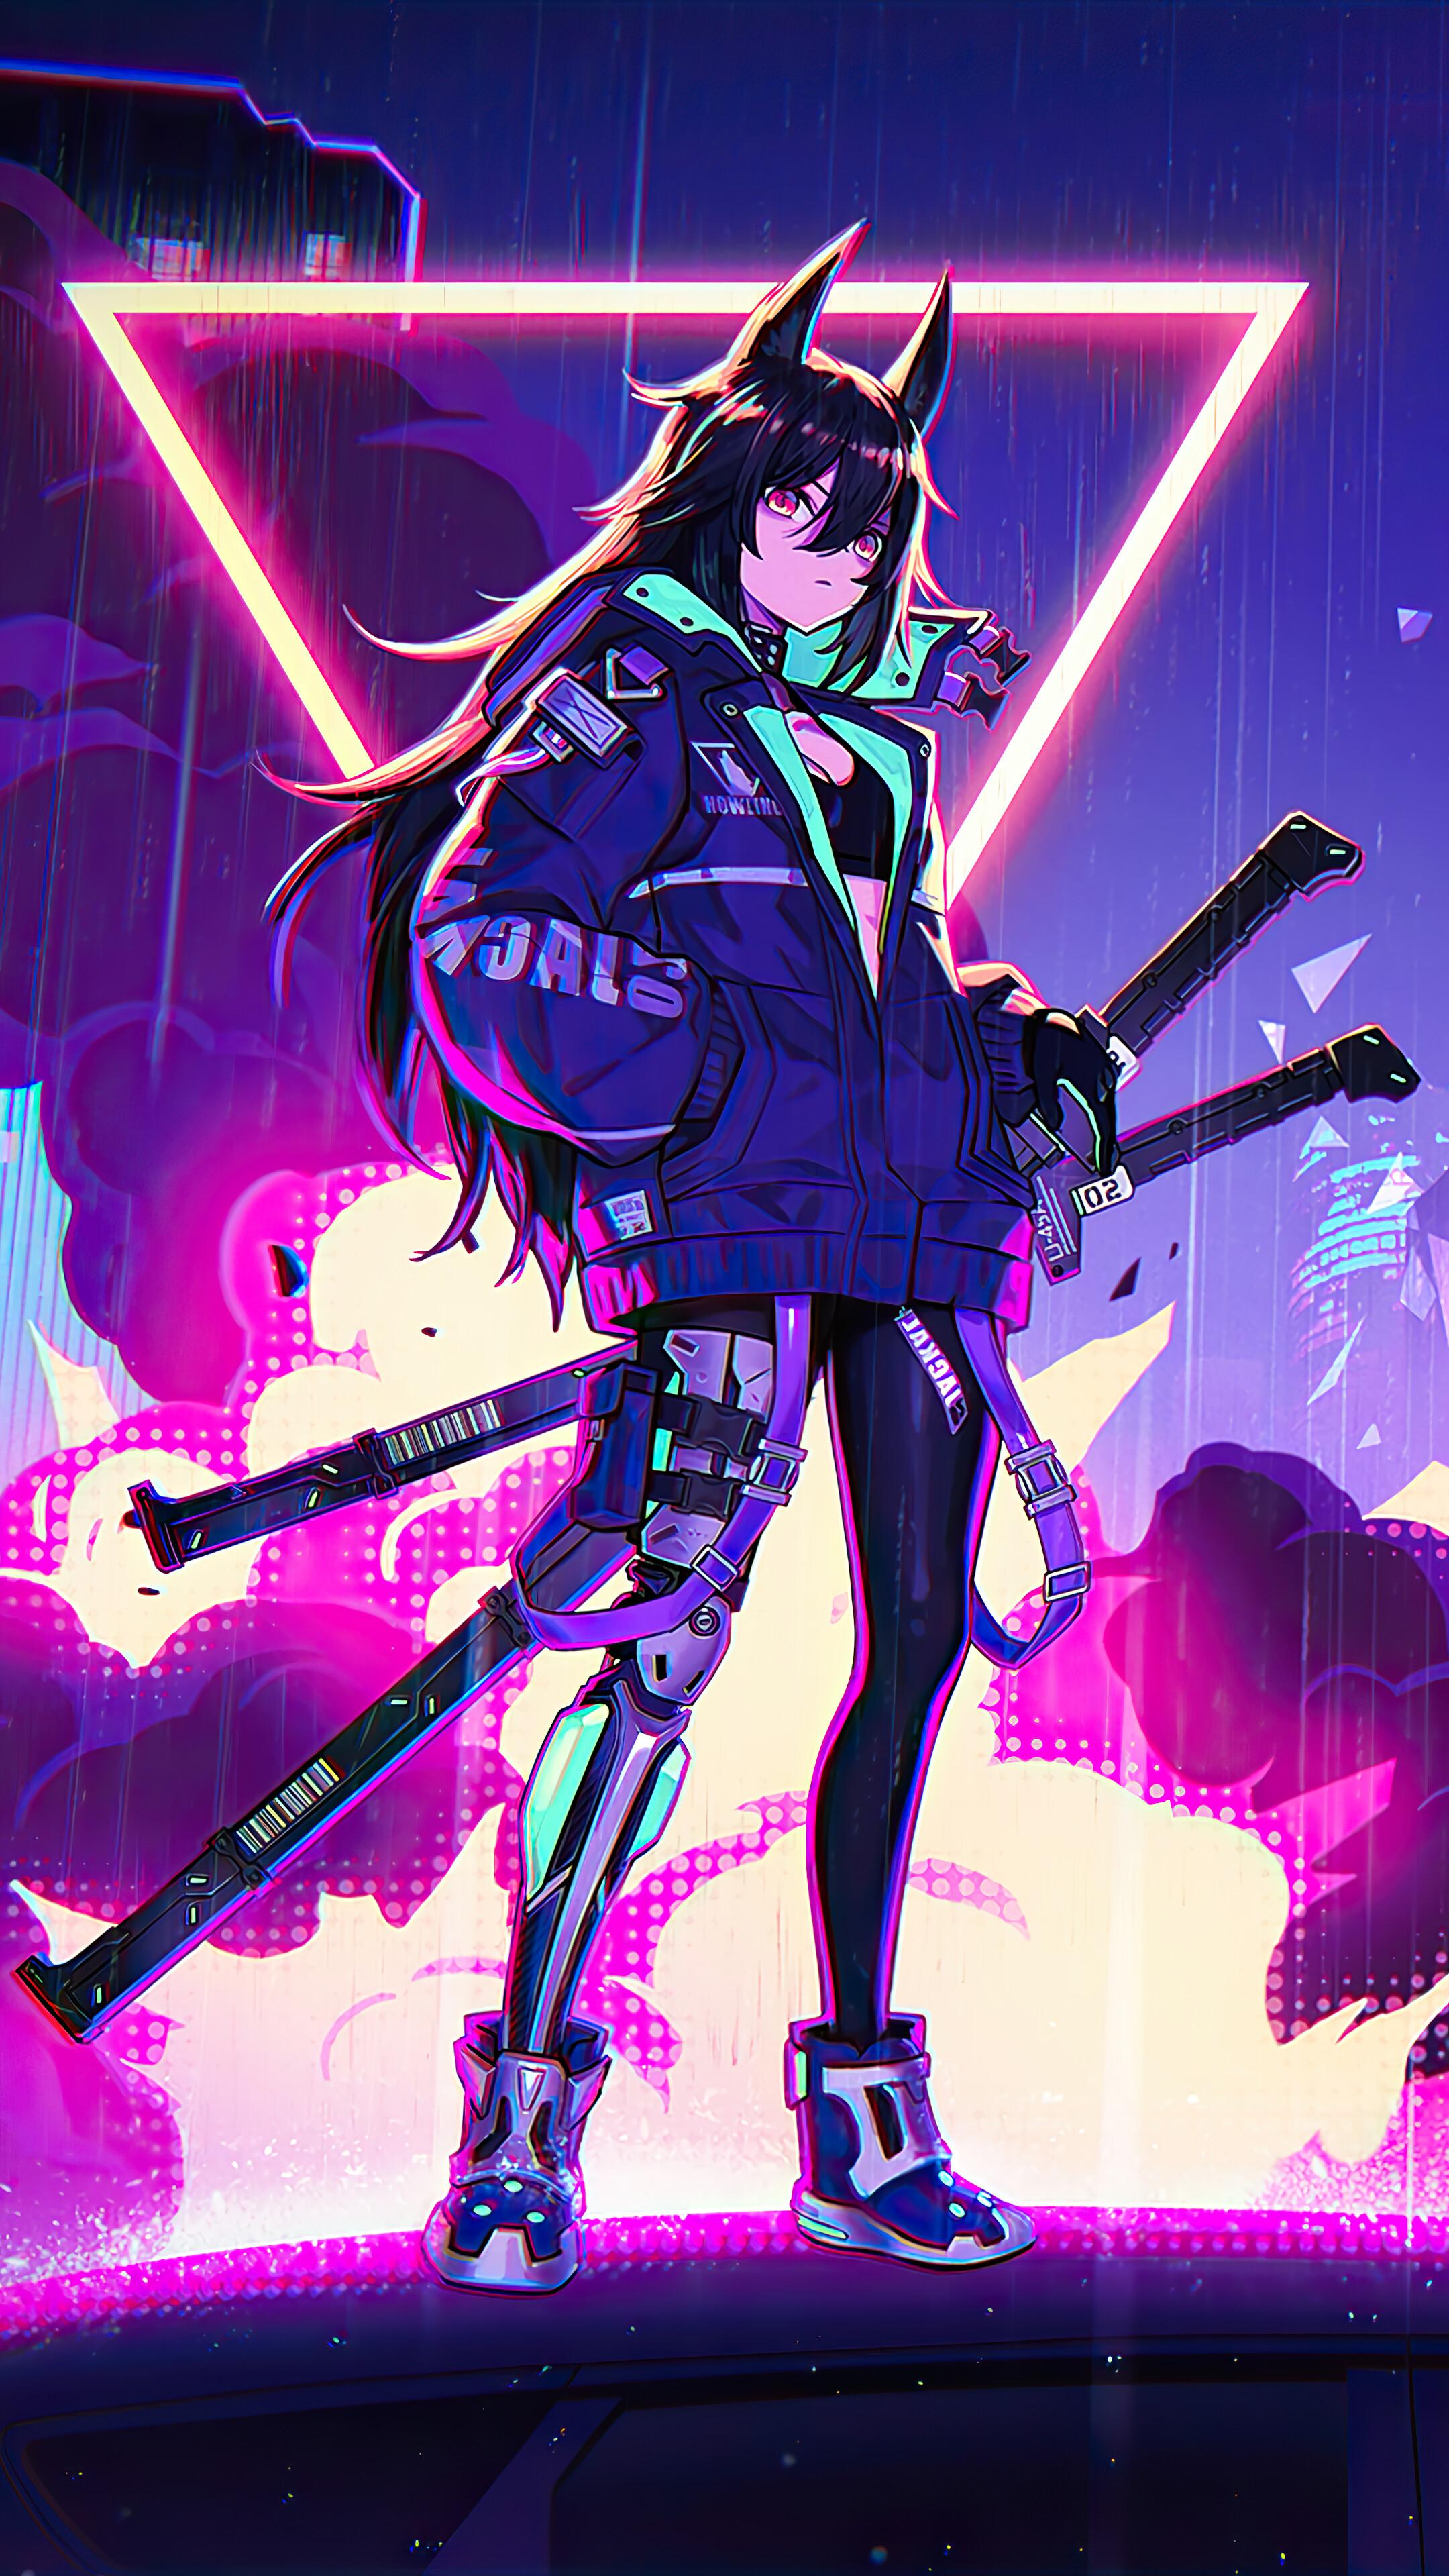 Beautiful Anime Cyberpunk Girl Wallpaper 4K - HeroWall Backgrounds